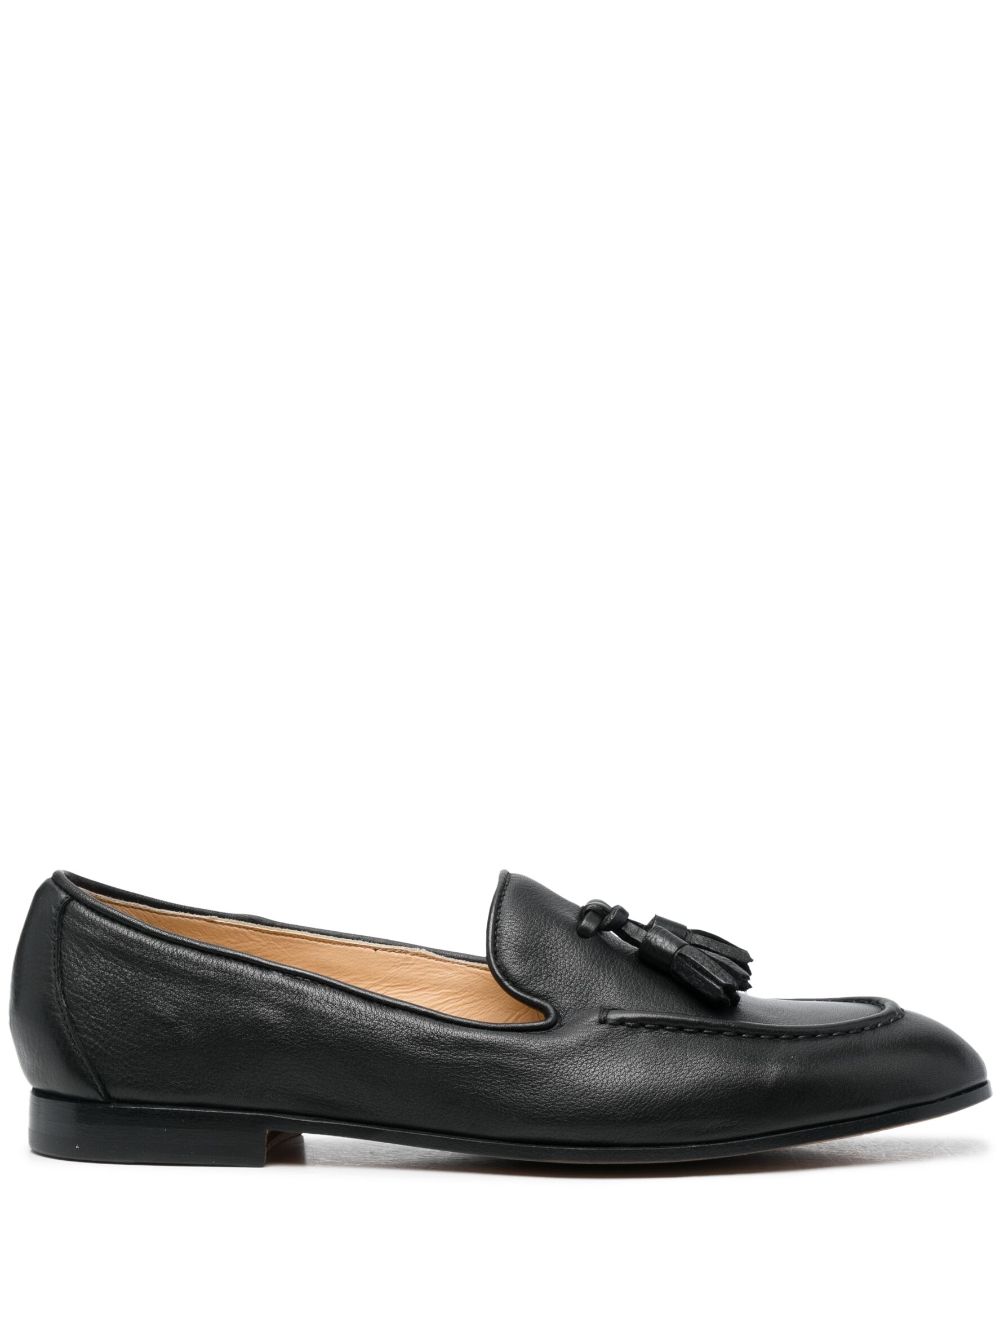 Doucal's tassel leather loafers - Black von Doucal's